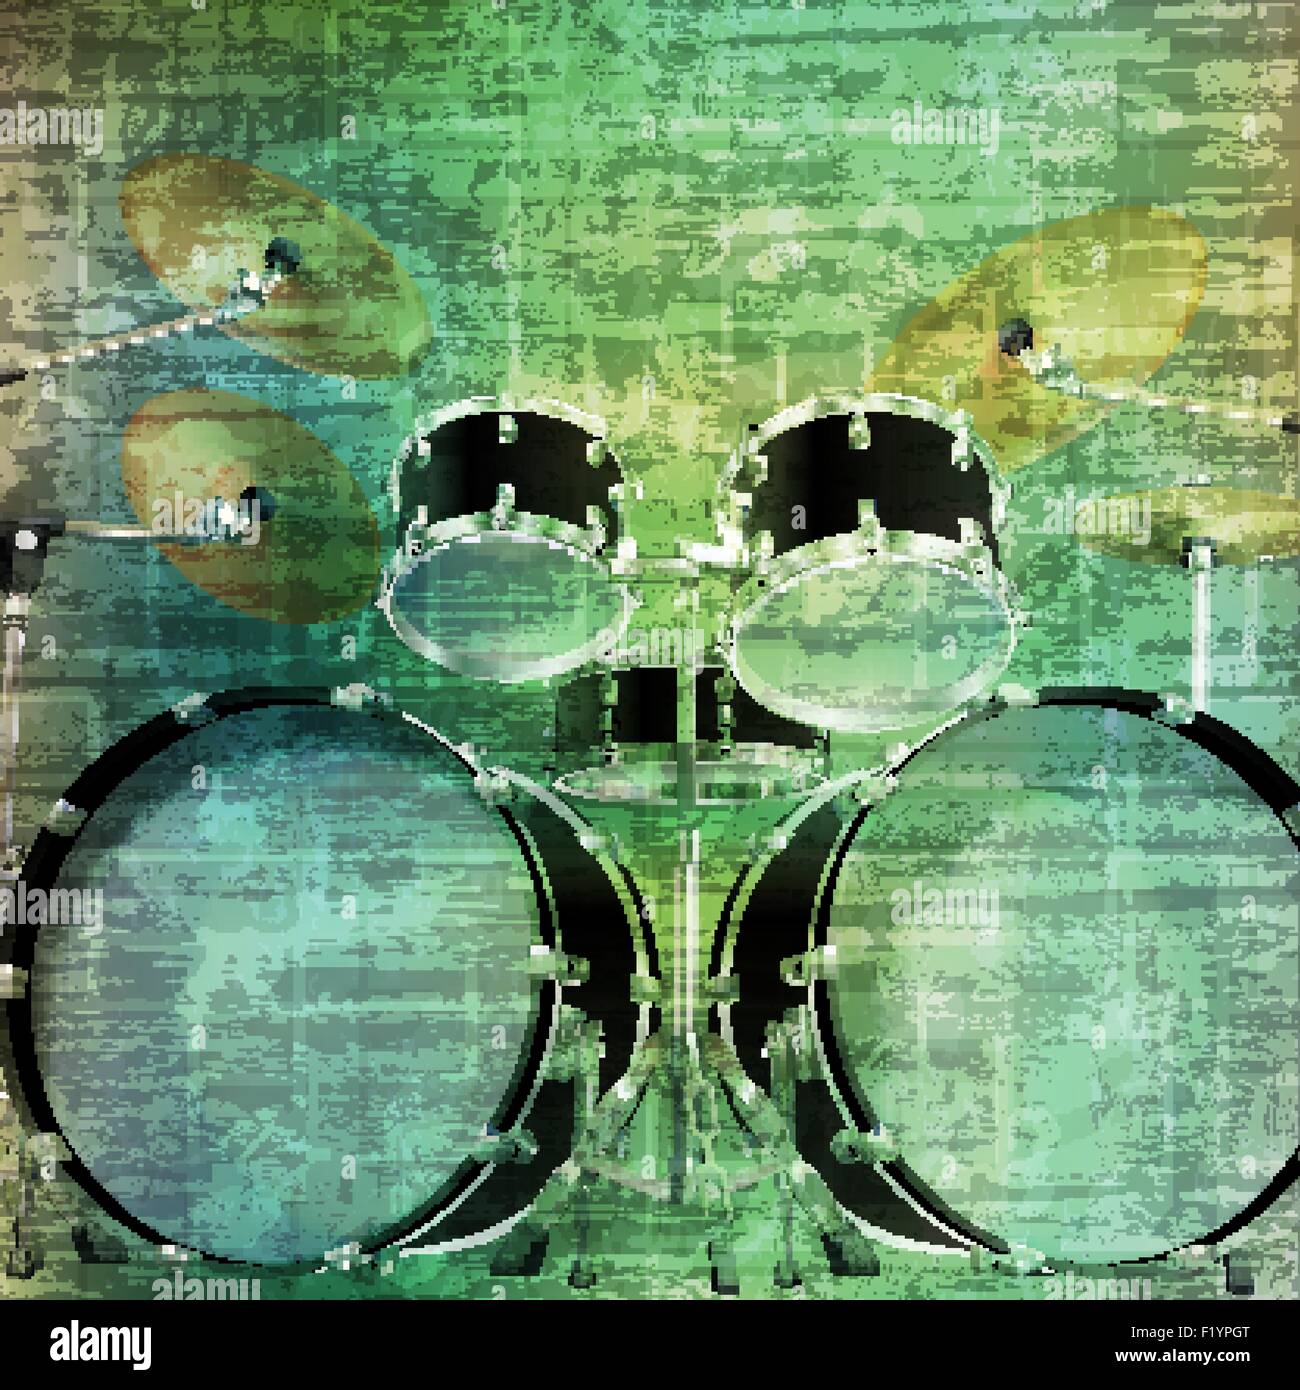 abstract music grunge vintage sound background drum kit vector illustration Stock Vector